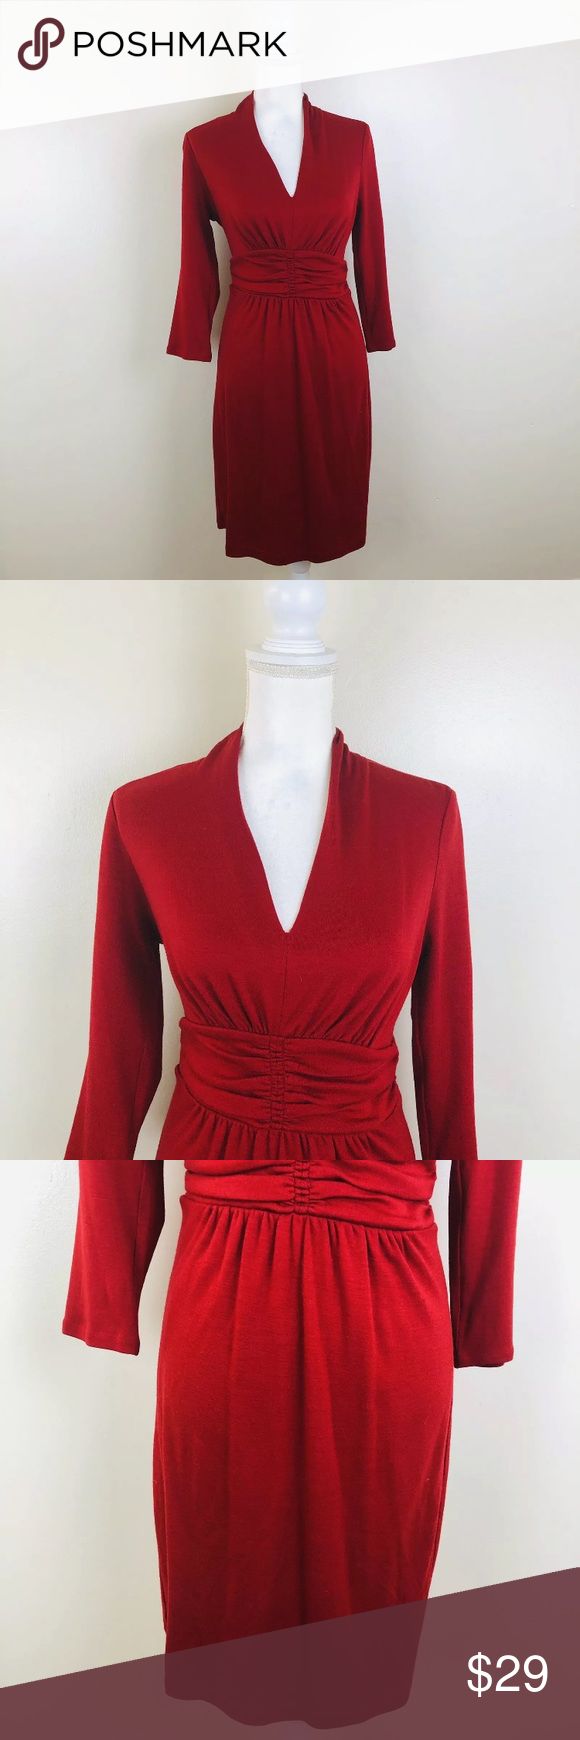 Banana Republic Women's Sz 4 Red Dress 100% Wool | Red dress, Dresses